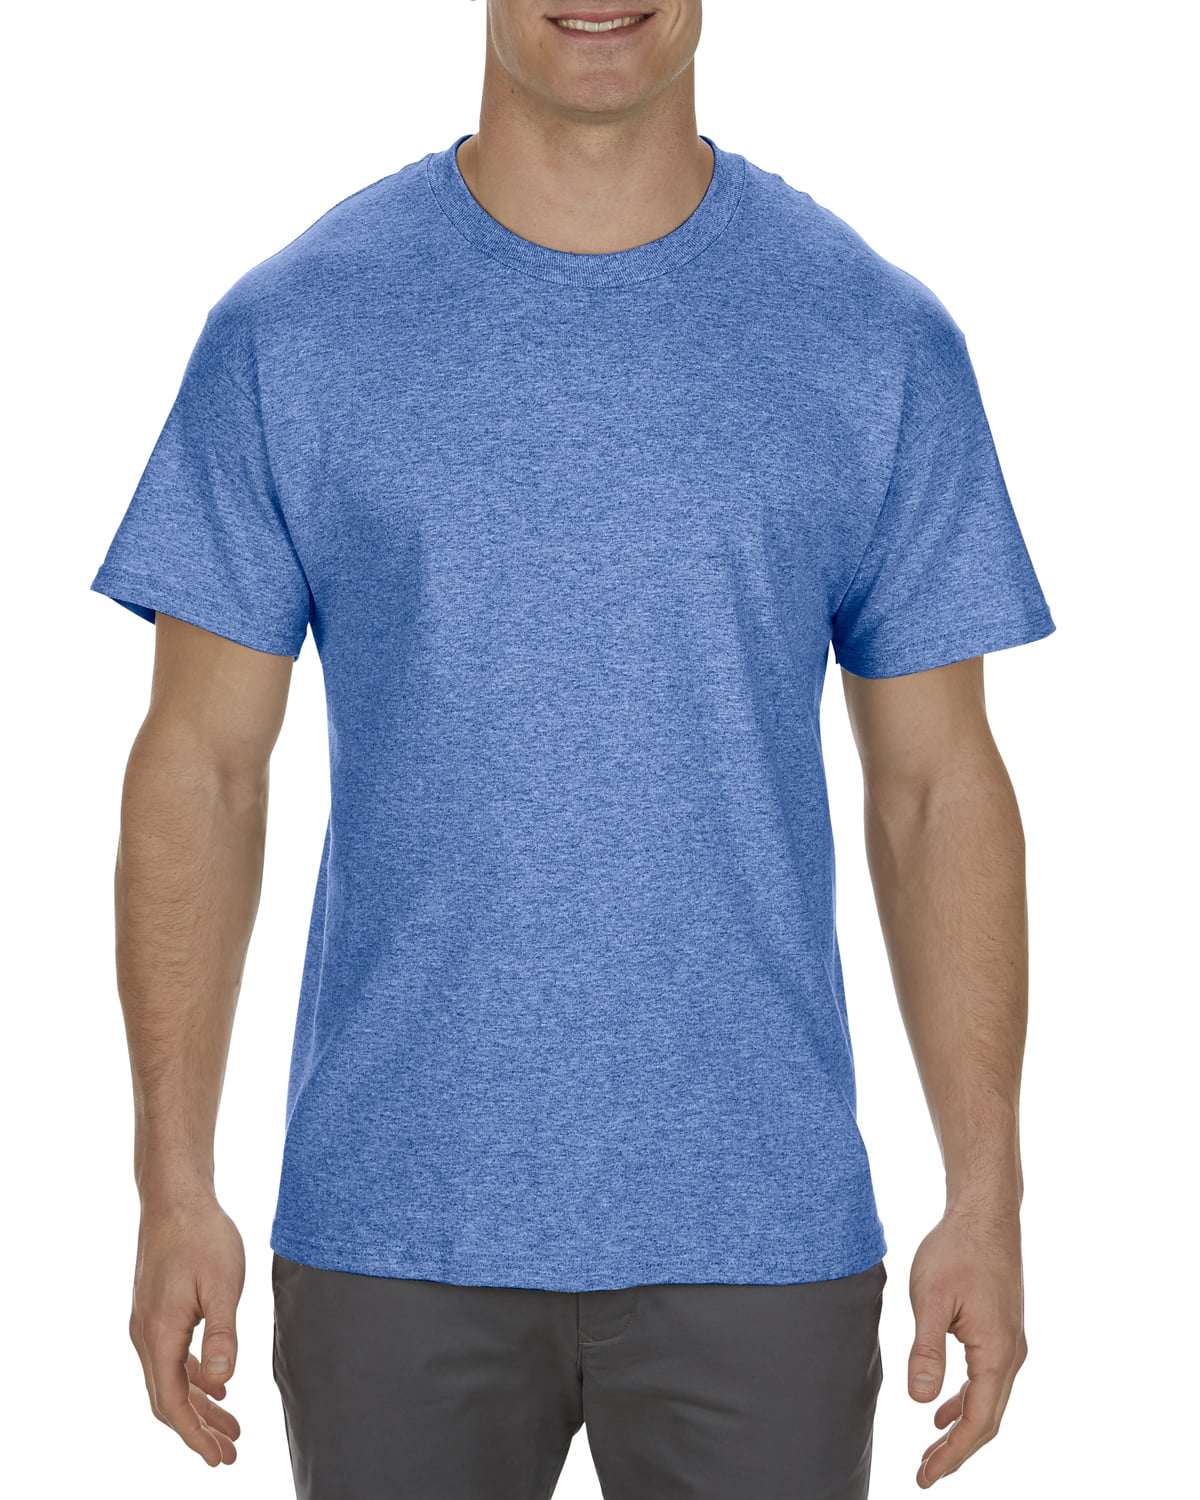 Alstyle 5.1 - AL1901 T-Shirt Navy Large Cotton 100% - Adult oz., Heather